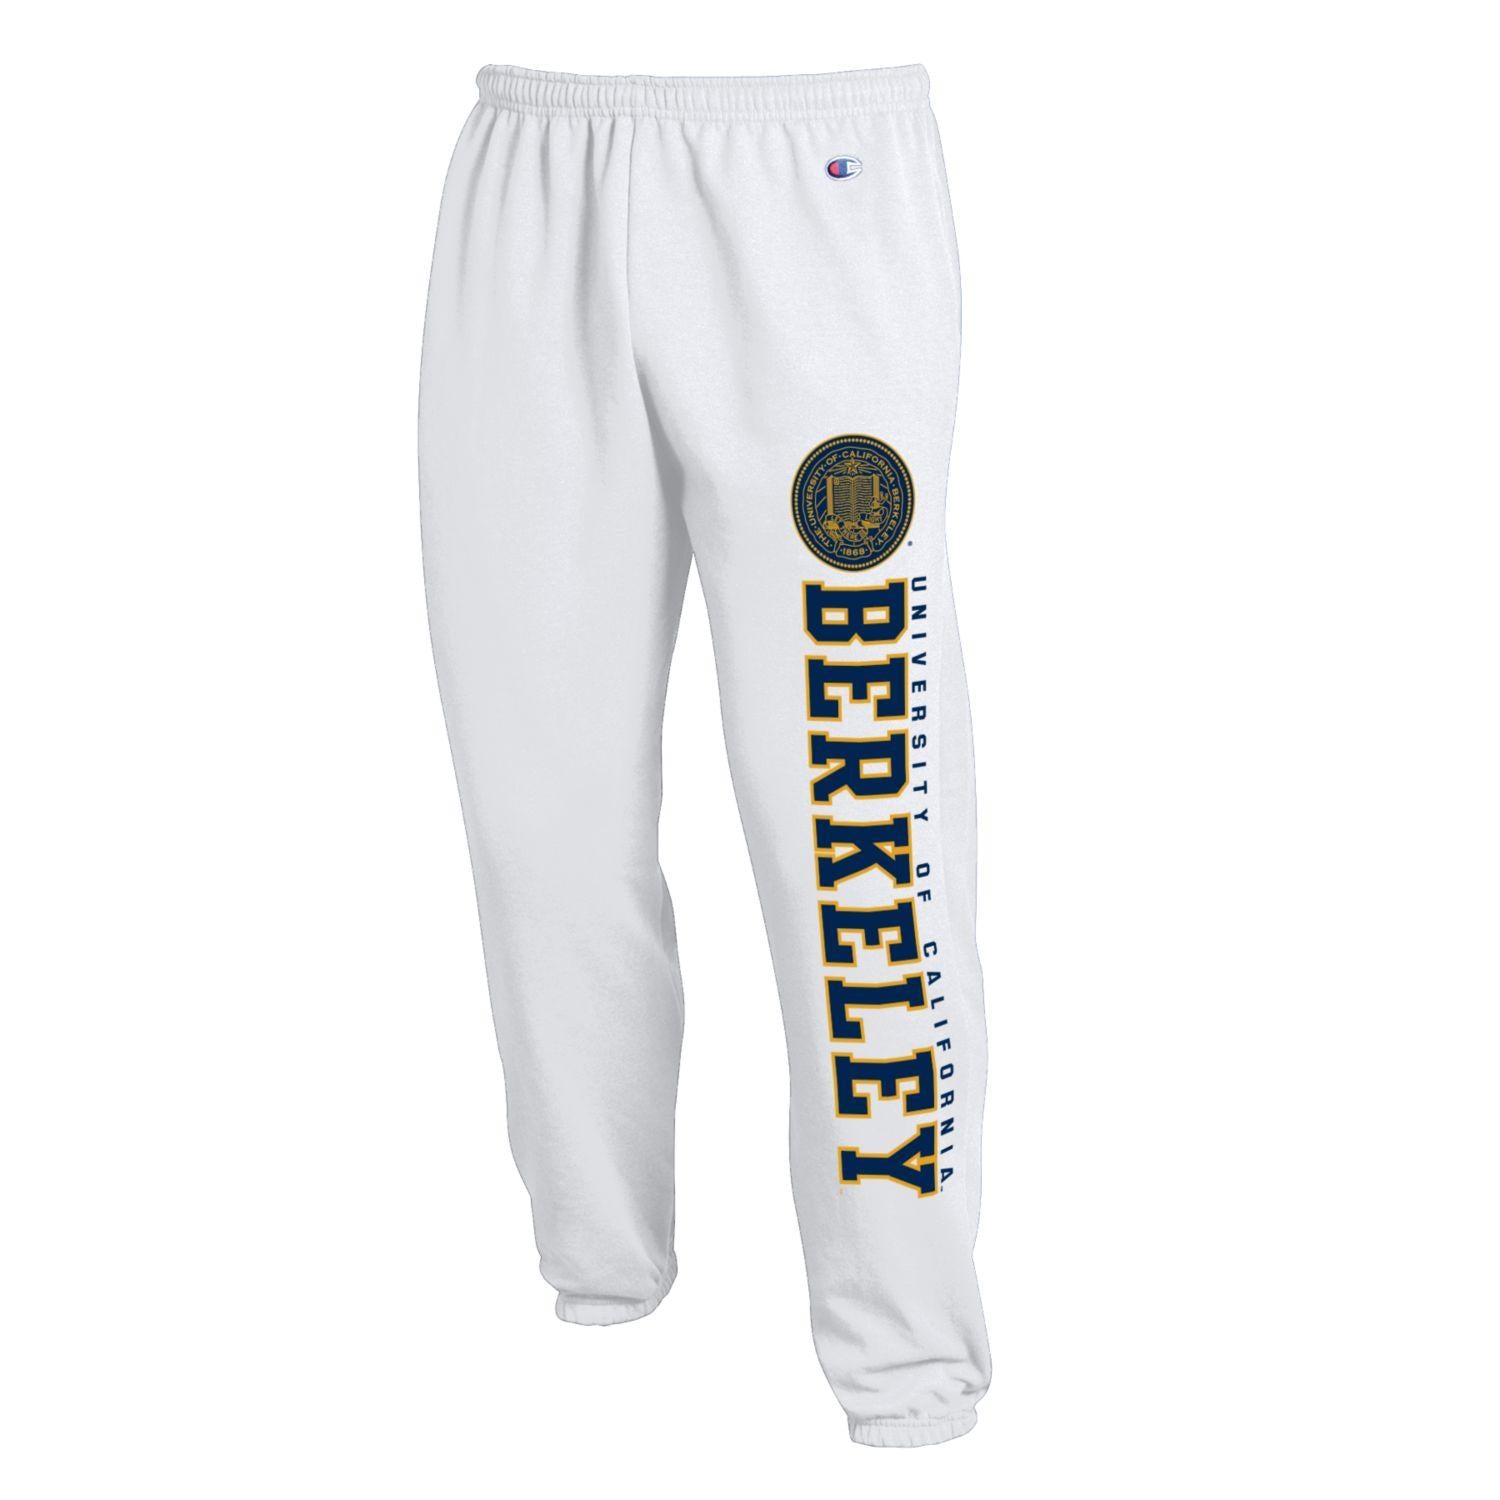 U.C. Berkeley Champion Men's banded bottom pants-White